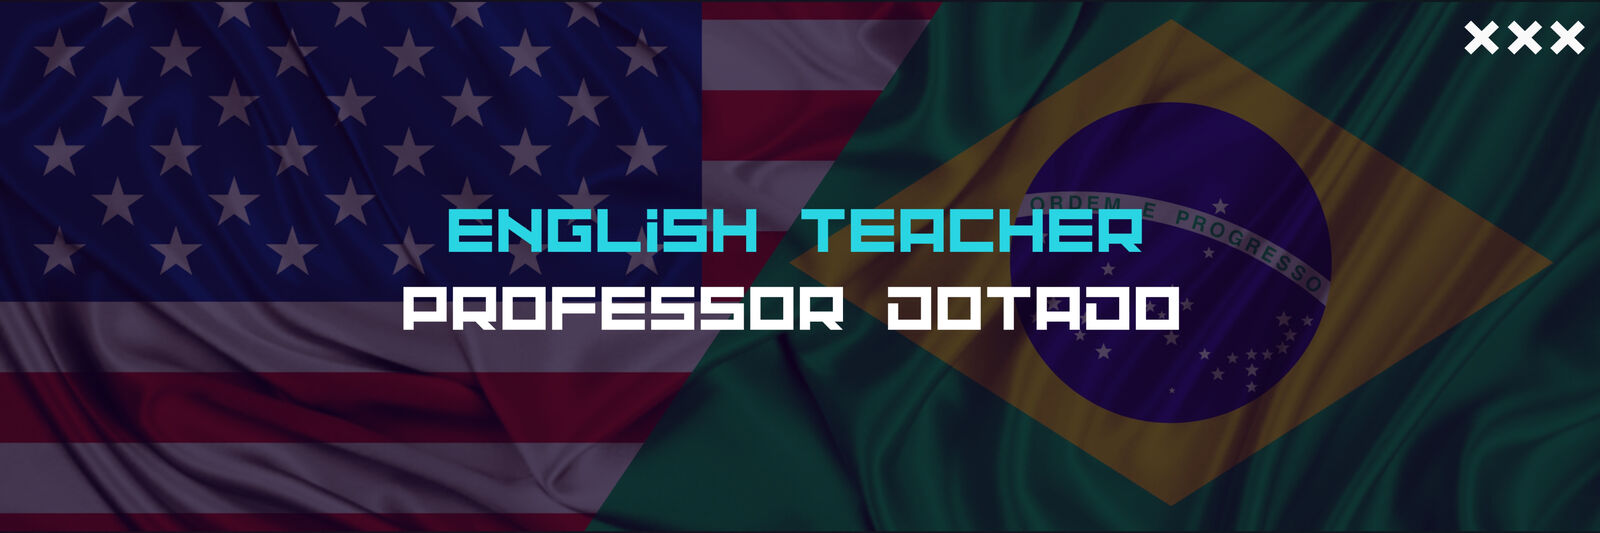 See English Teacher 🍆 profile